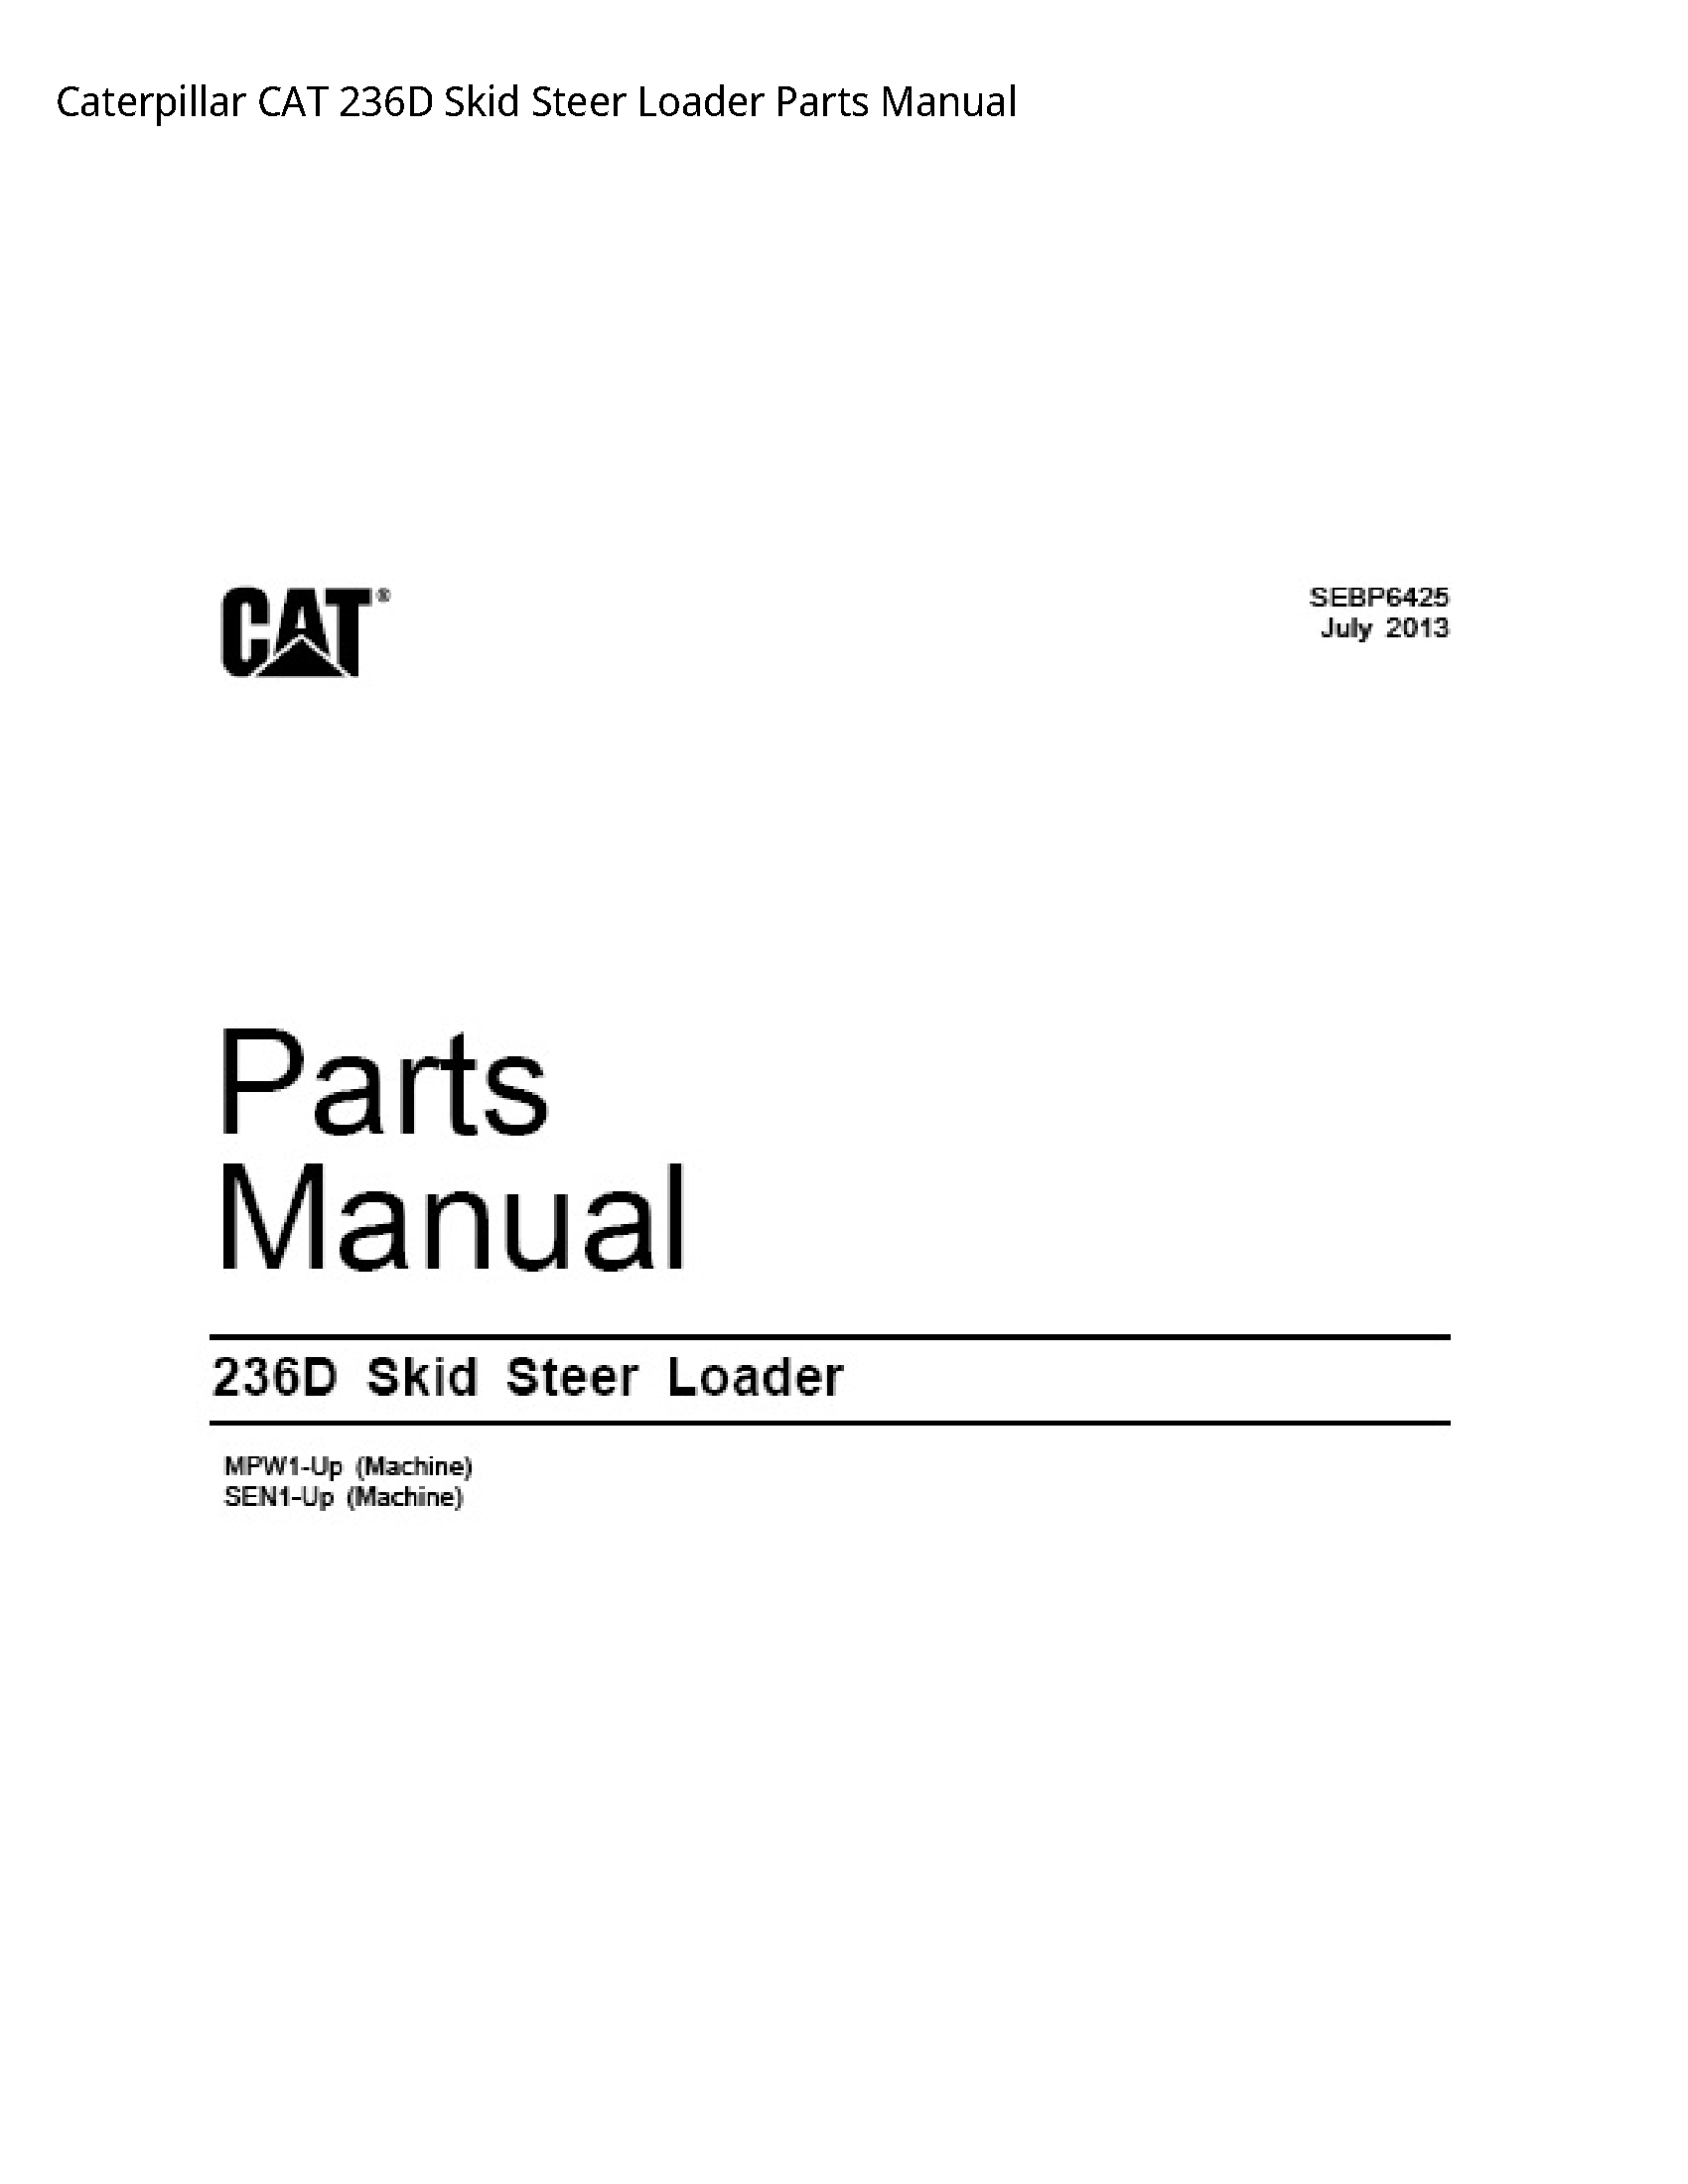 Caterpillar 236D CAT Skid Steer Loader Parts manual